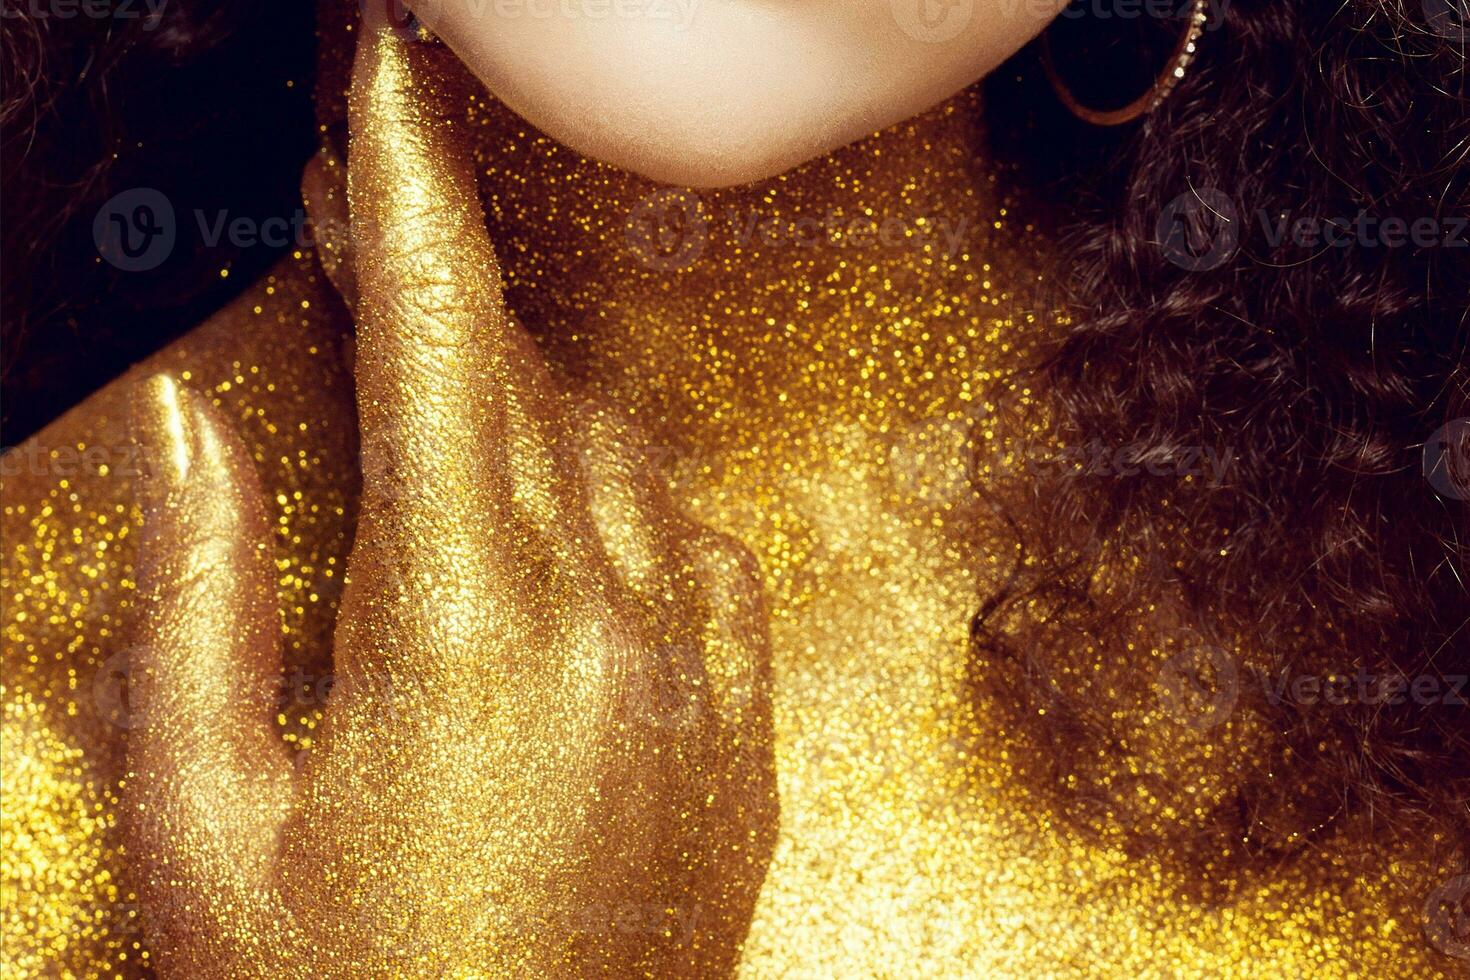 Magic Girl Portrait in Gold. Golden Makeup photo